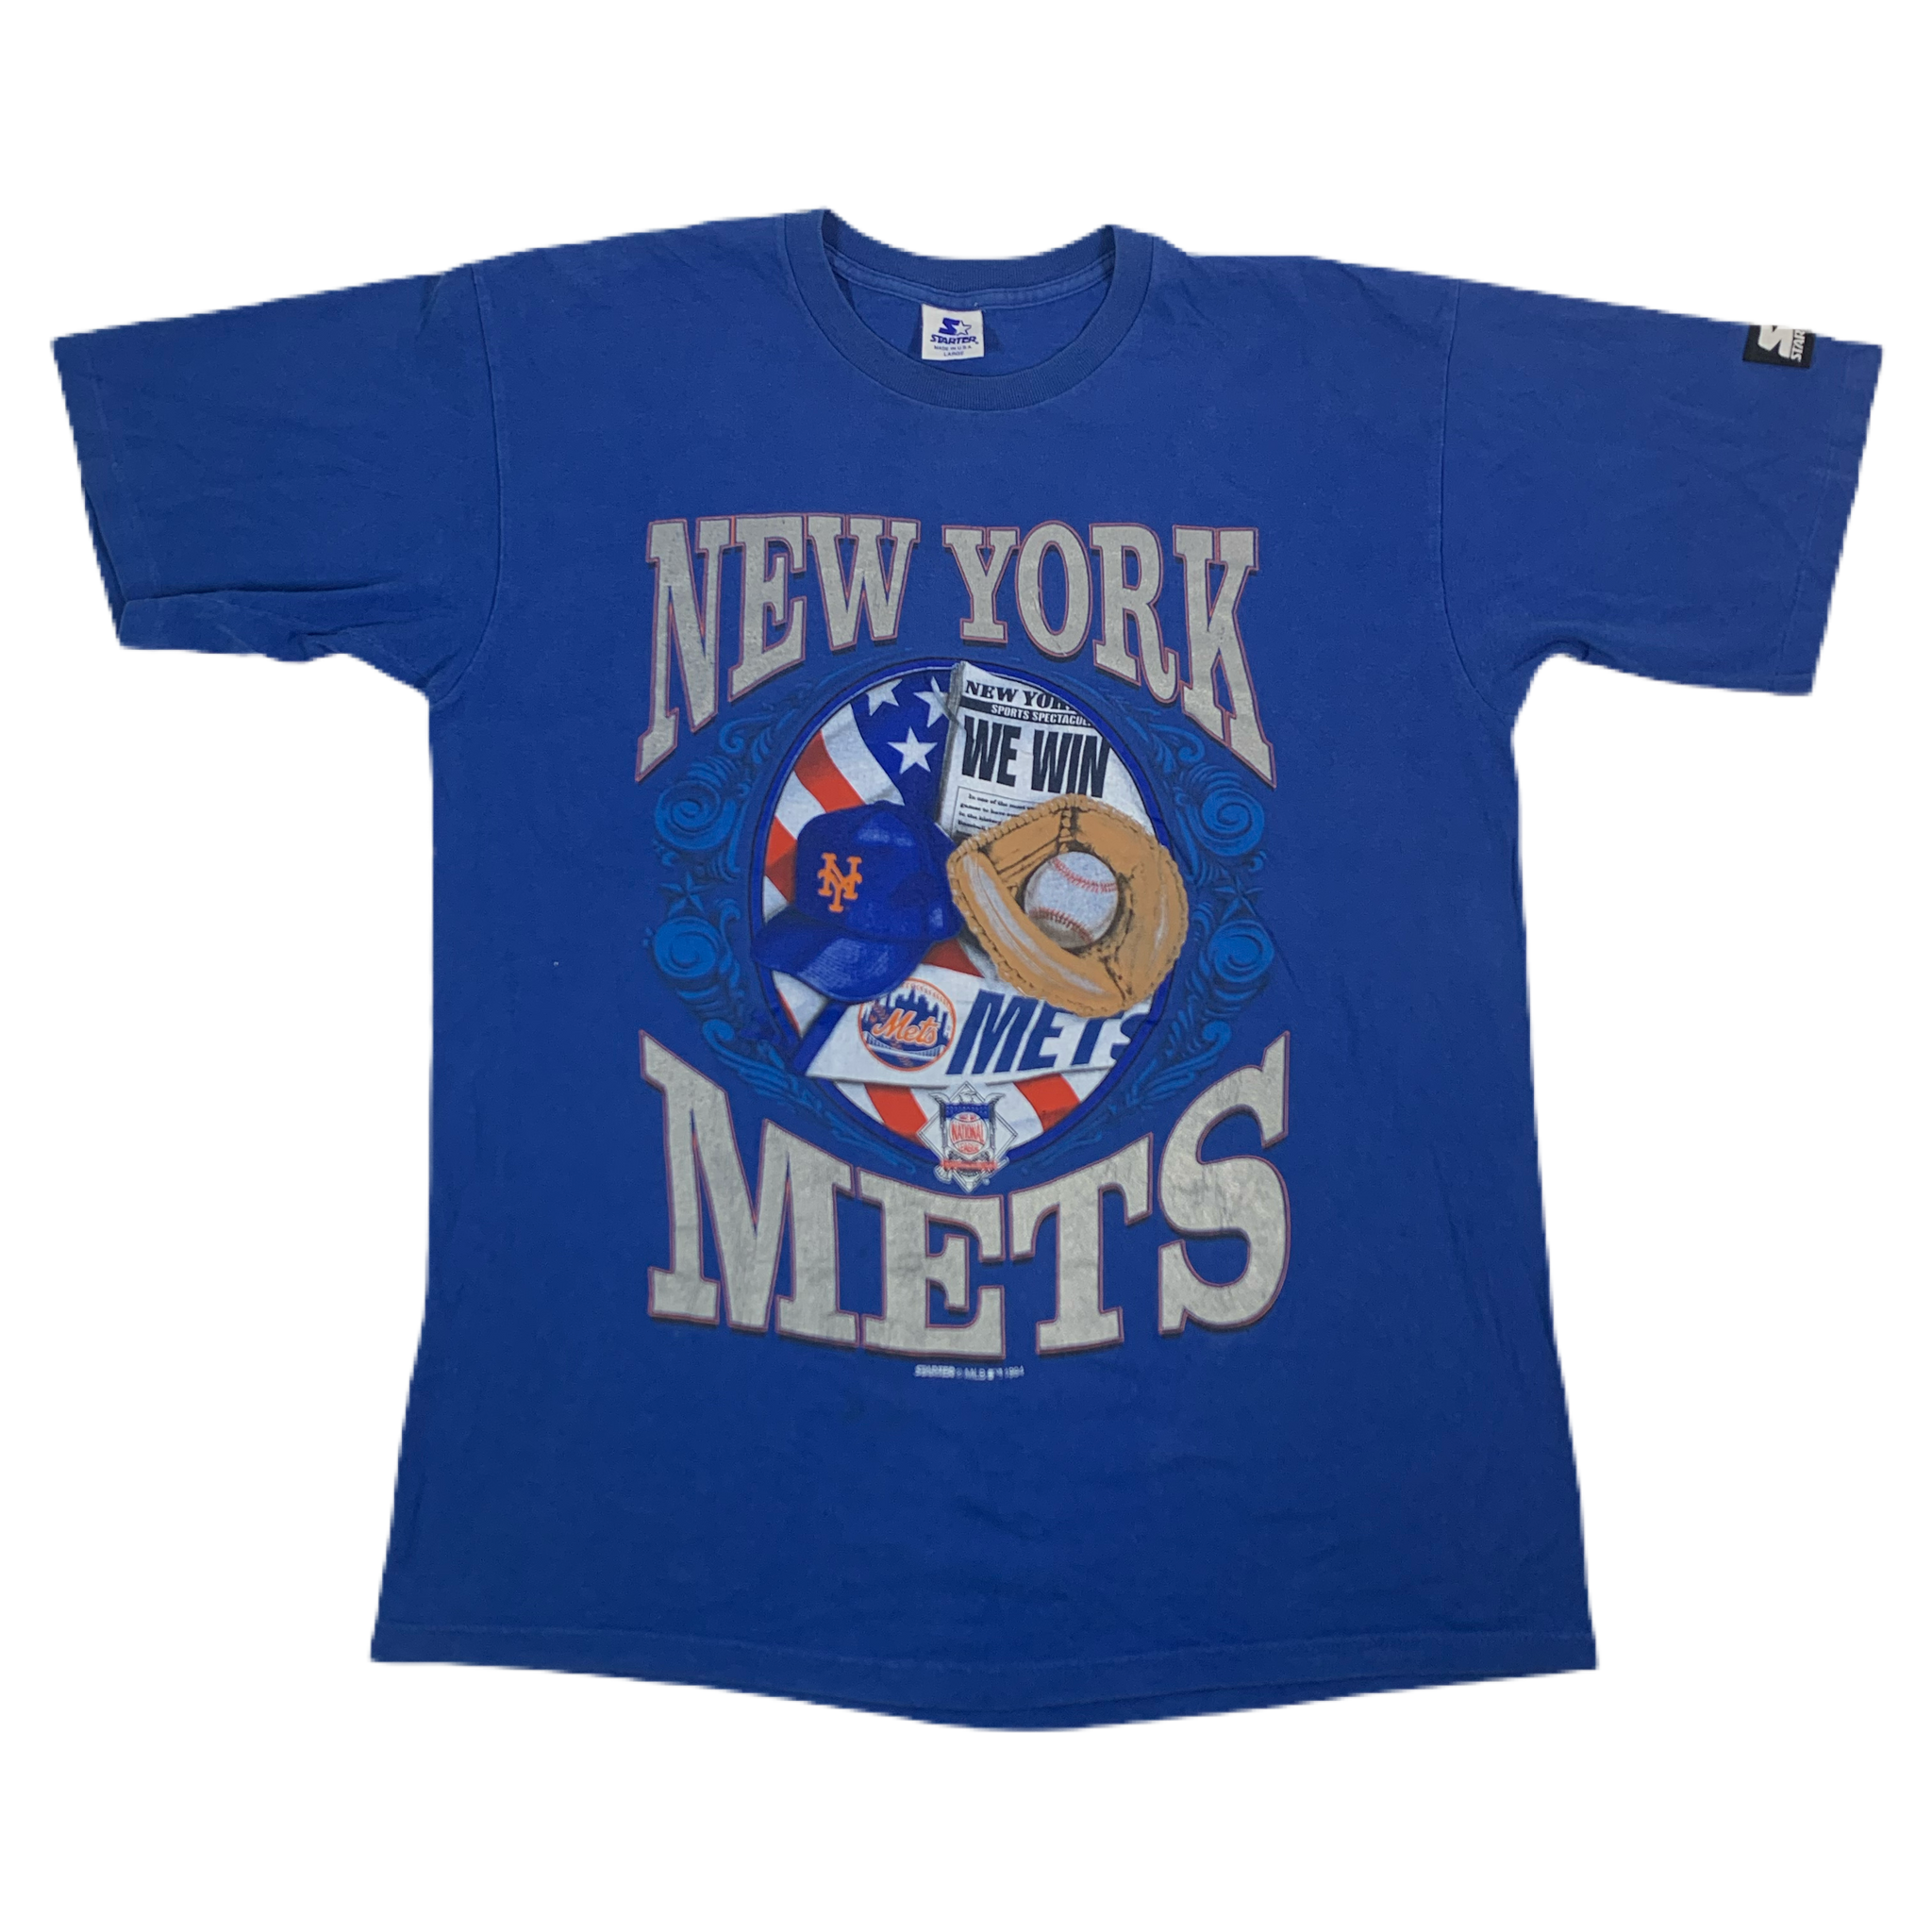 Fotl 2000 Opening Day New York Mets T-Shirt